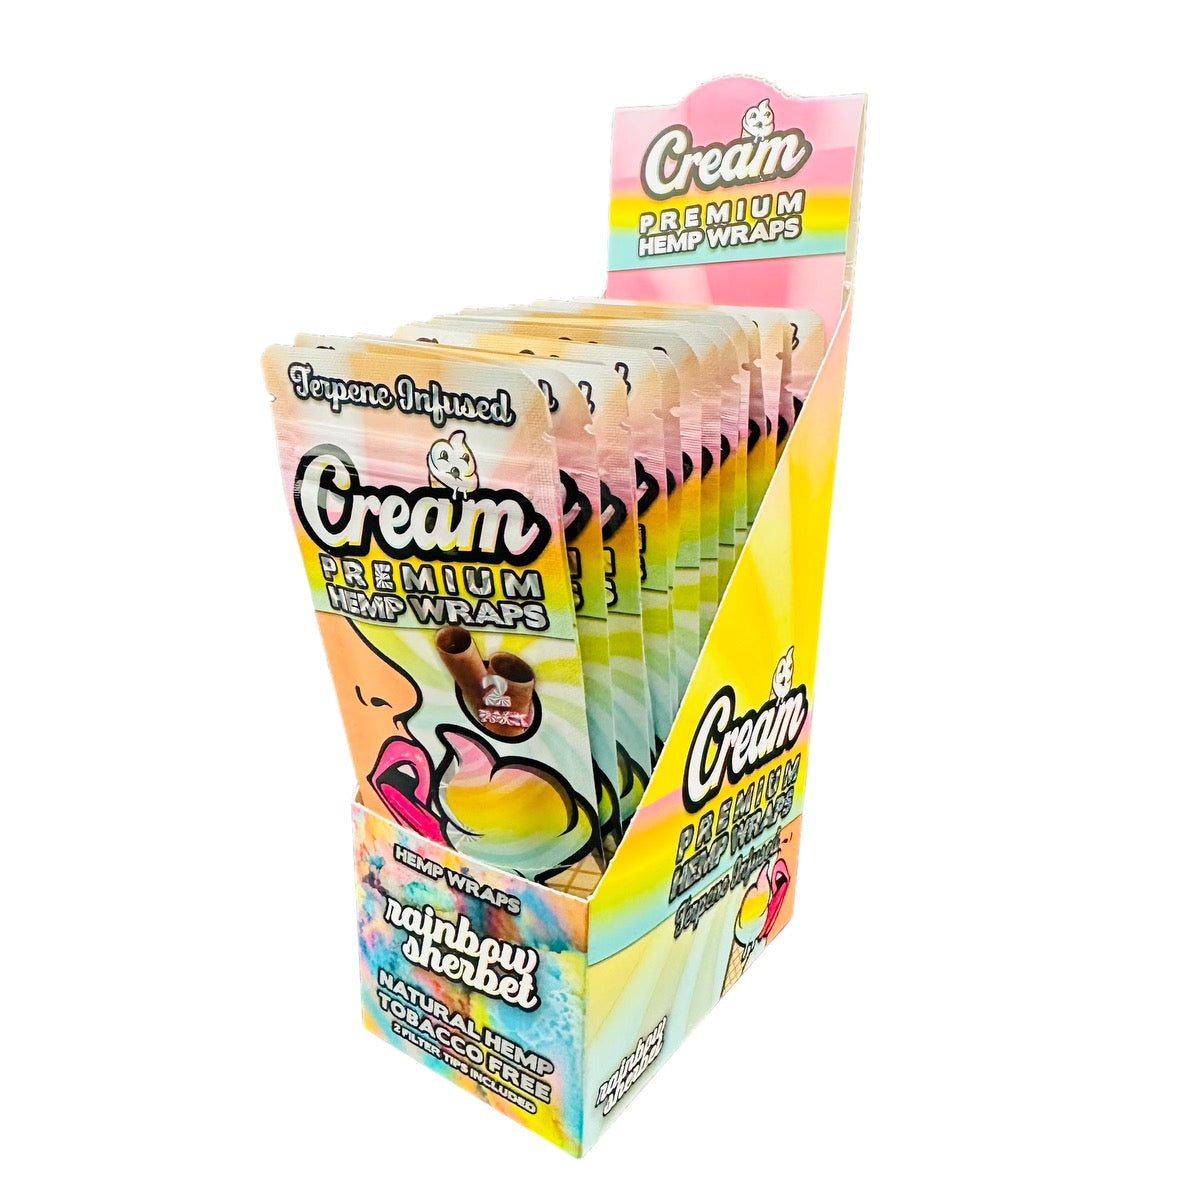 Cream Premium Hemp Wraps, 2 Per Pack, Box of 25 Packs (Flavor Options Available) (B2B)